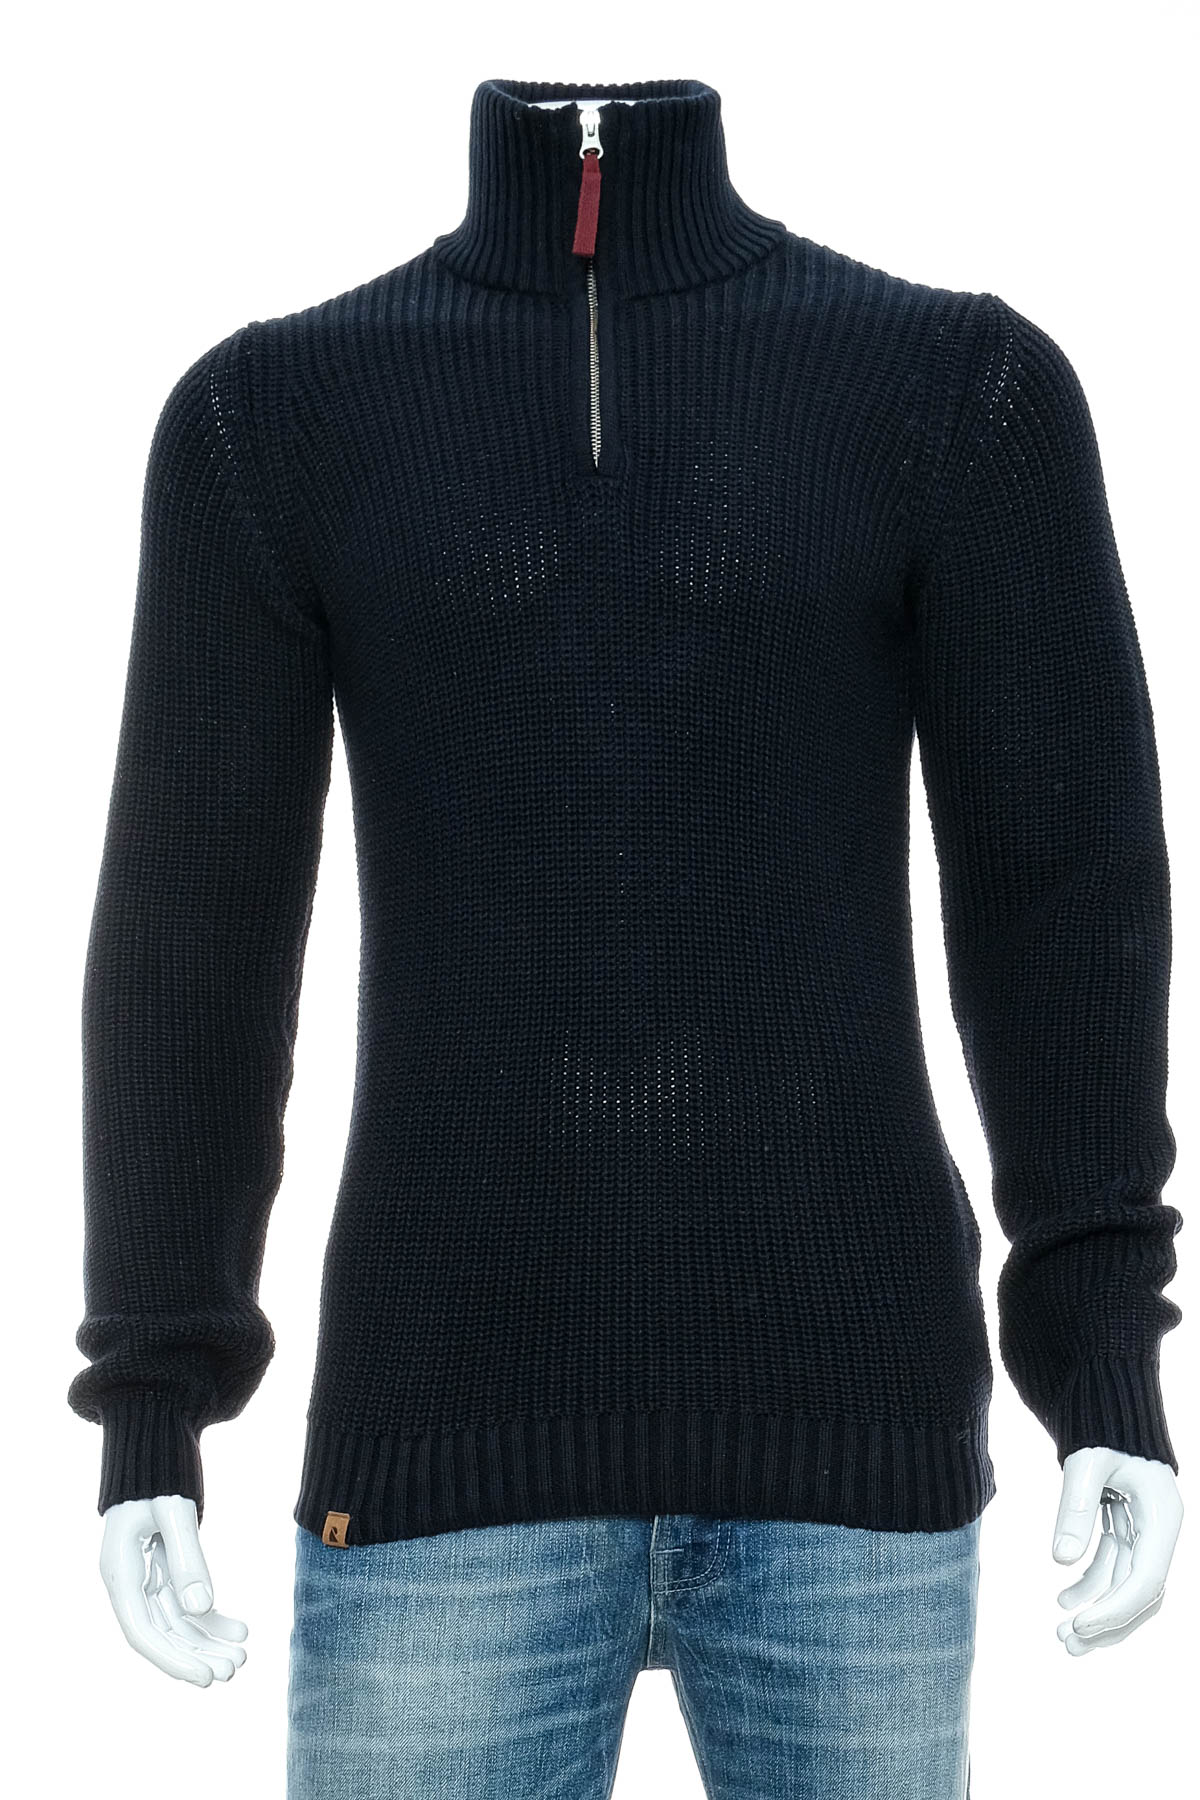 Men's sweater - Recolution - 0